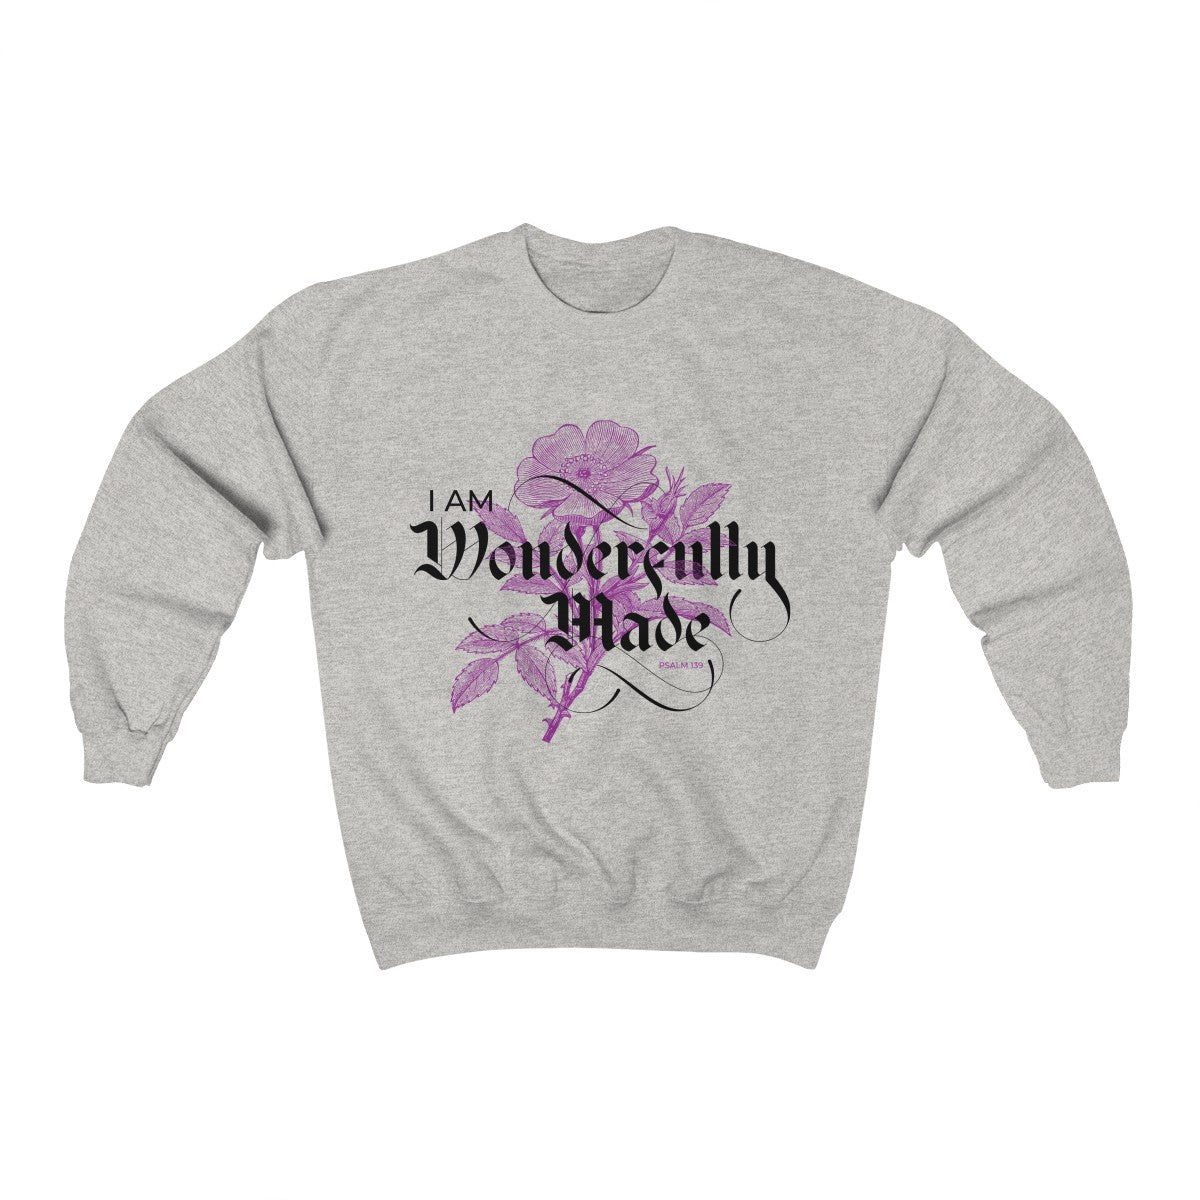 Wonderfully Made | Crewneck Sweatshirt